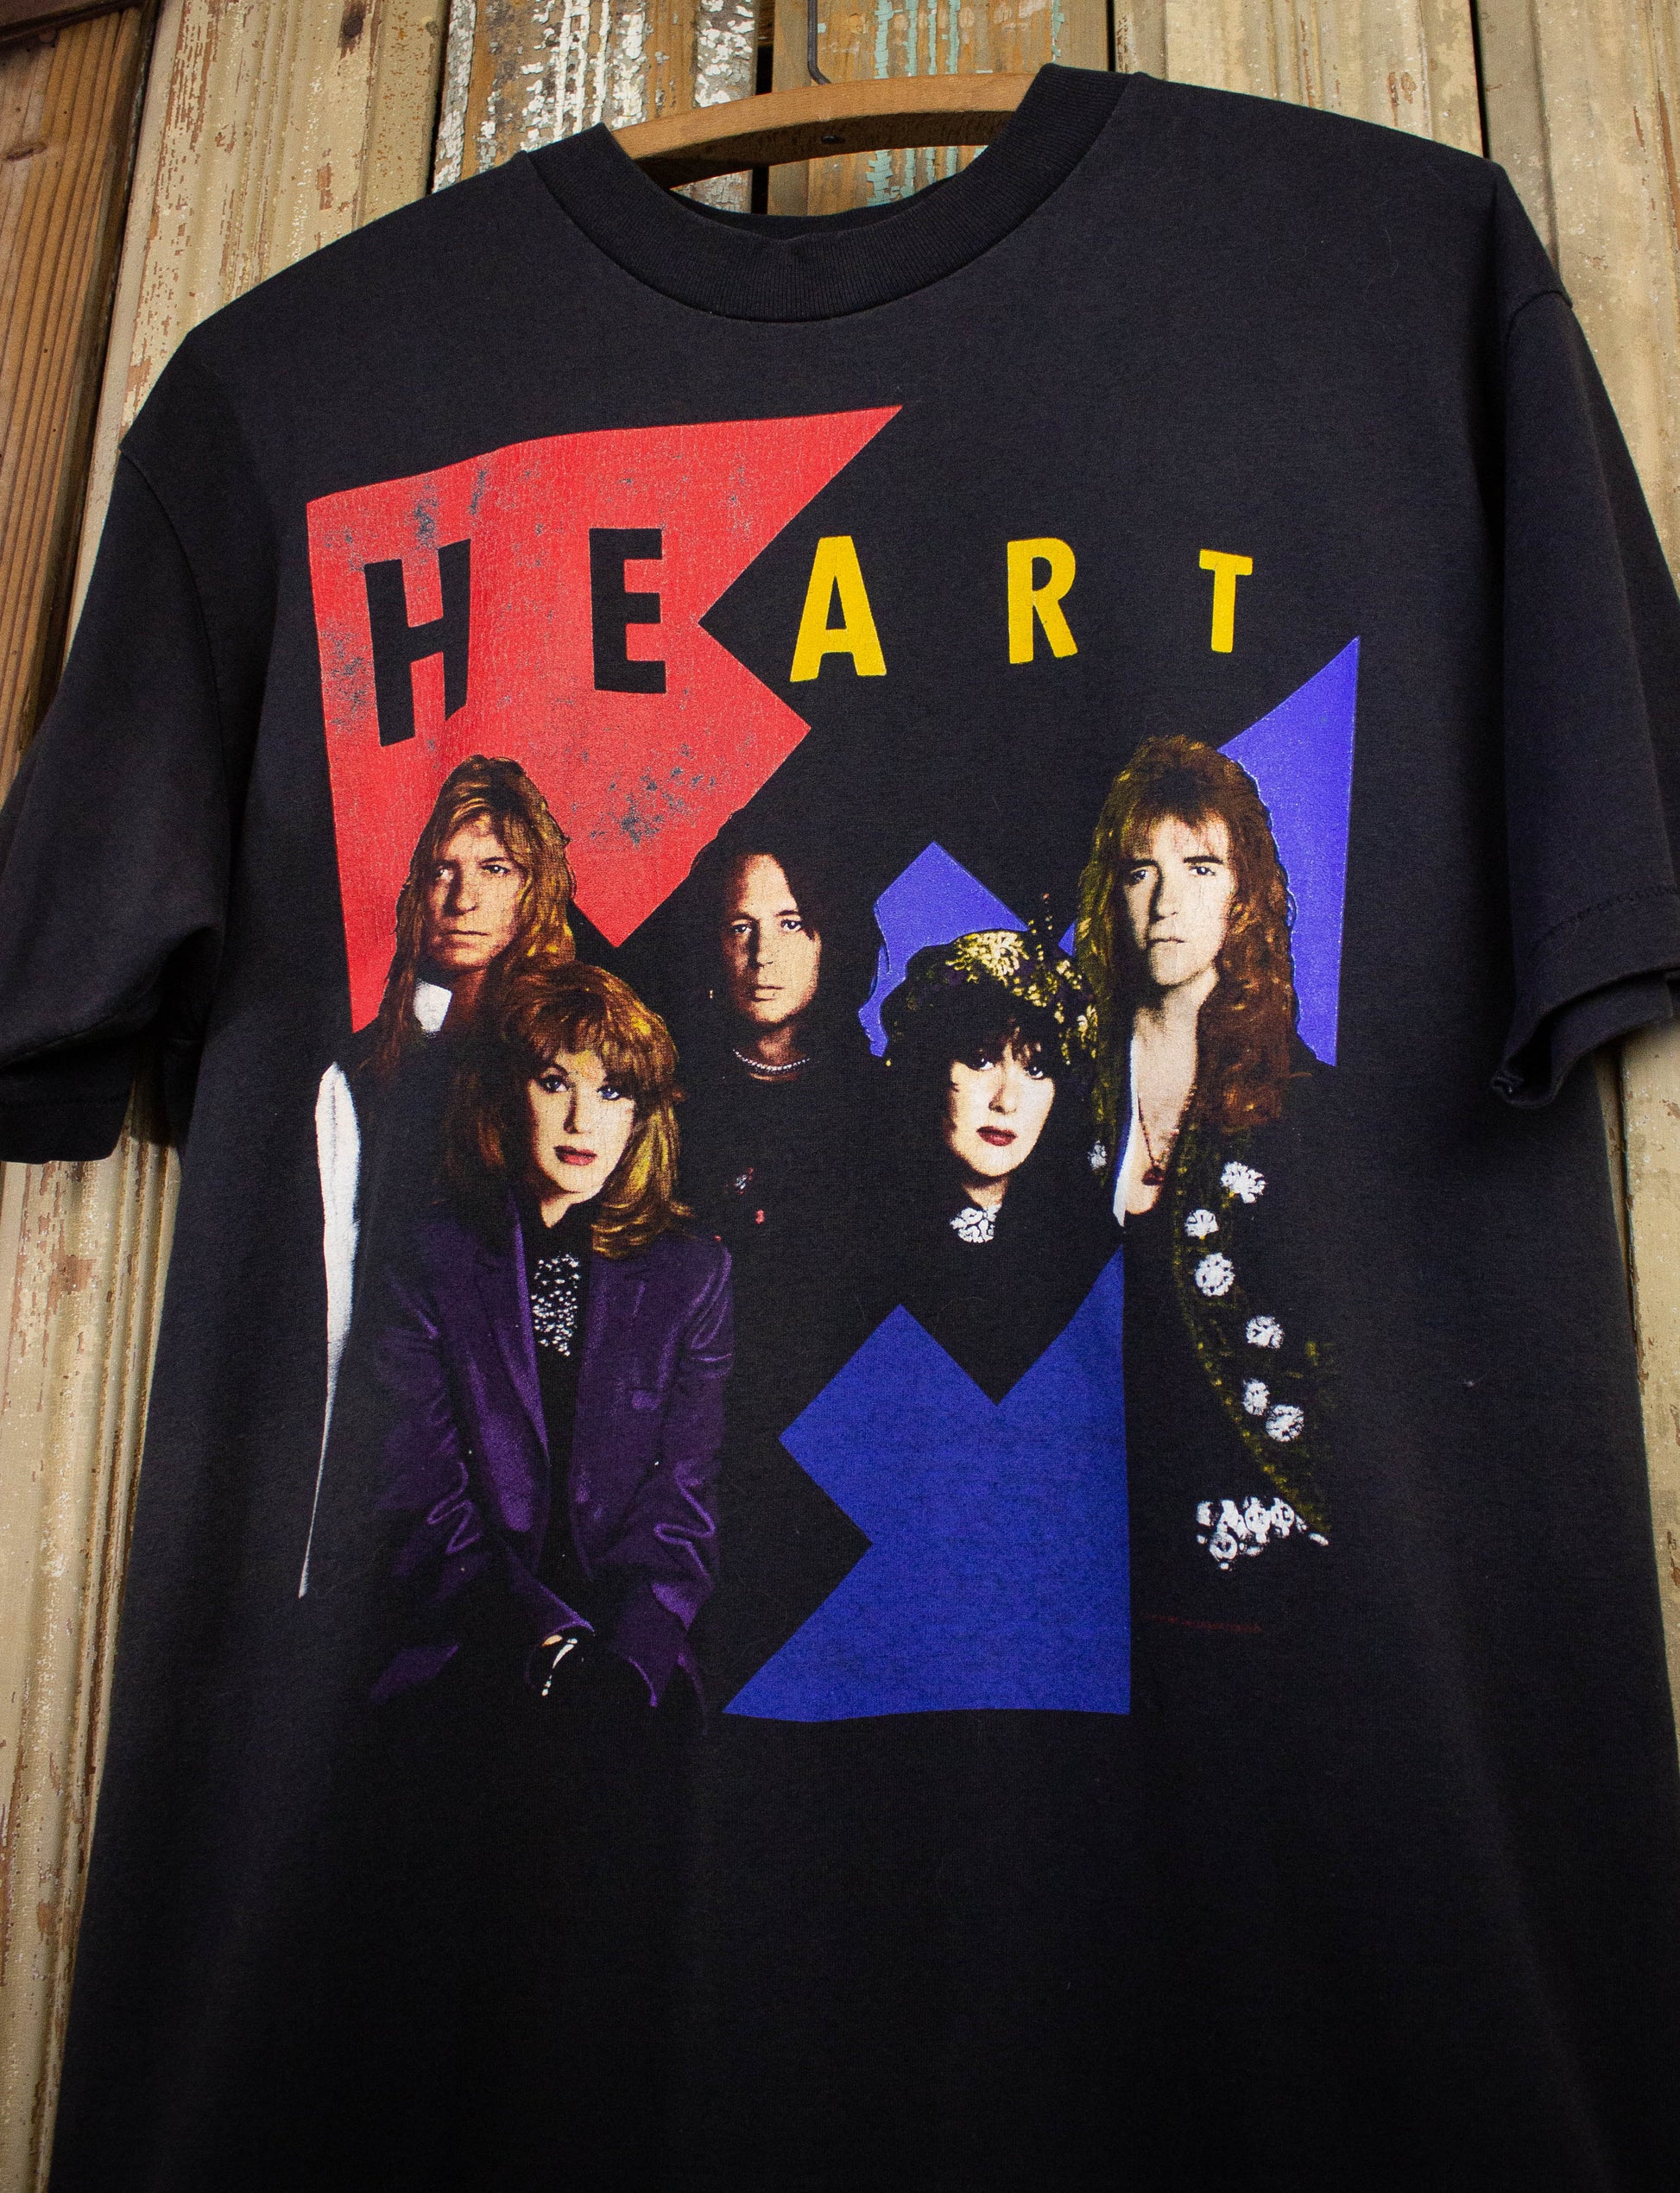 Vintage Heart Brigade World Tour Concert T Shirt Black 1990 Black Large